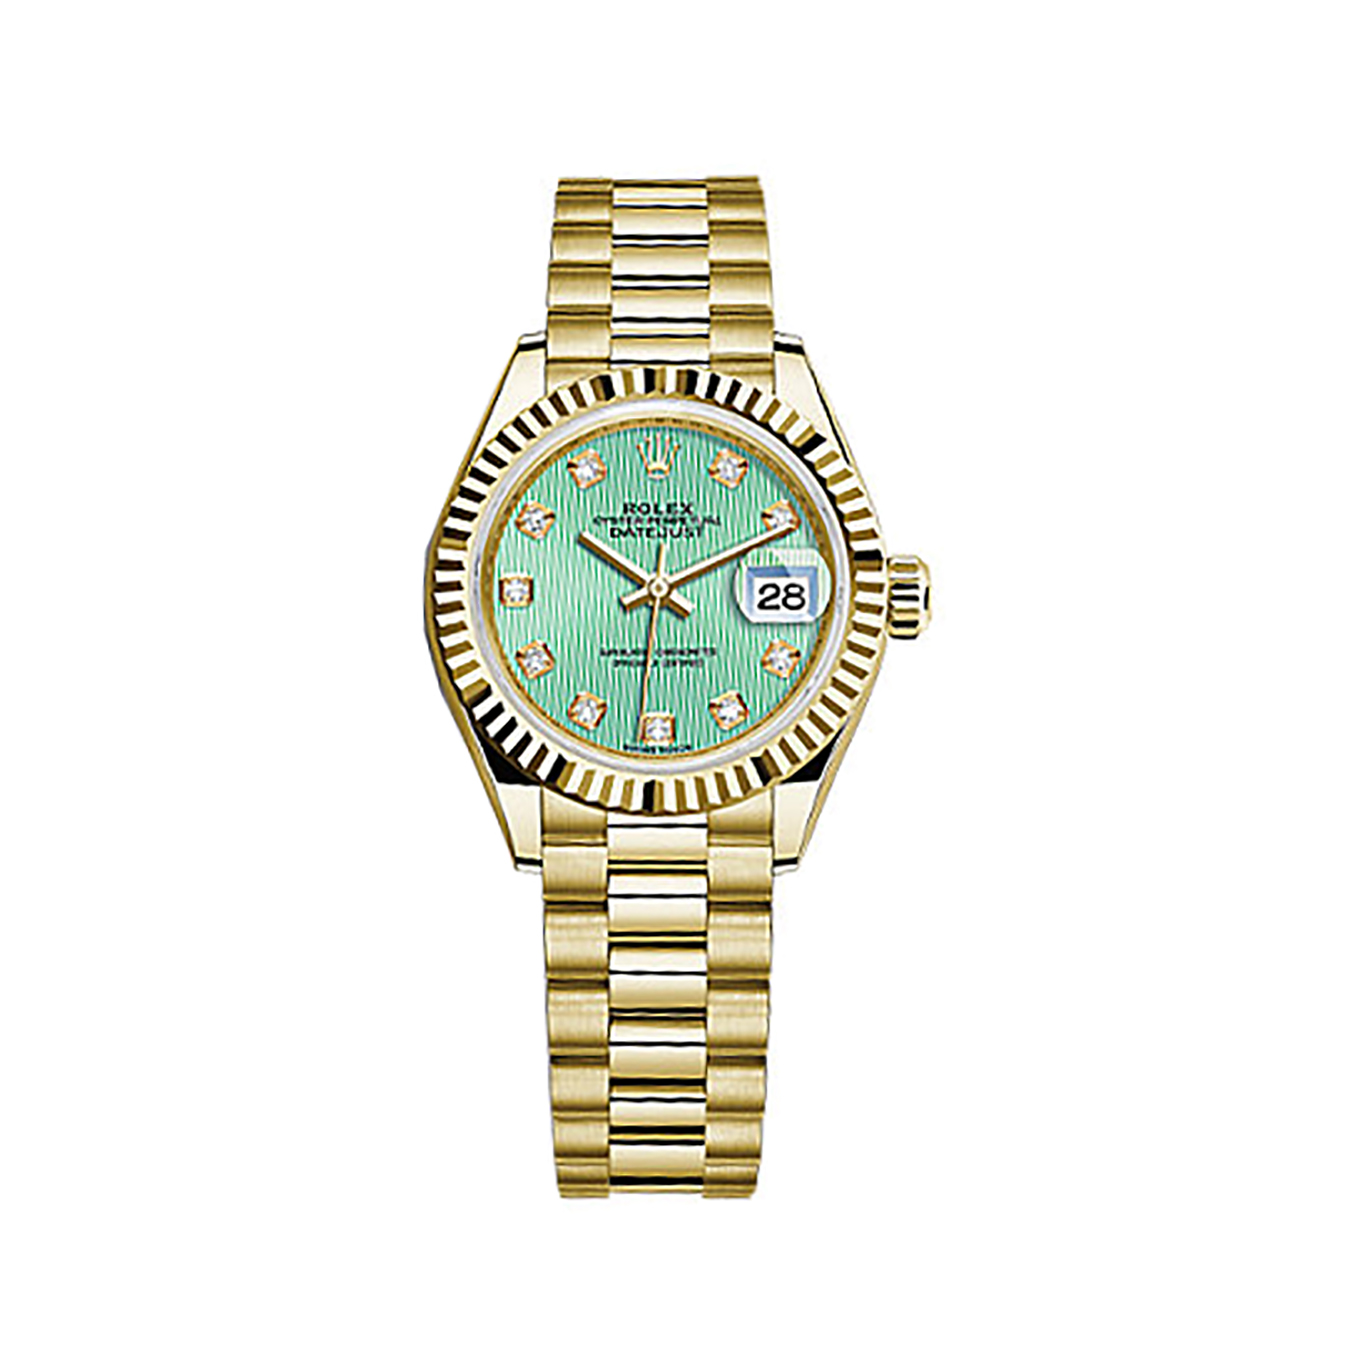 Lady-Datejust 28 279178 Gold Watch (Mint Green Set with Diamonds)